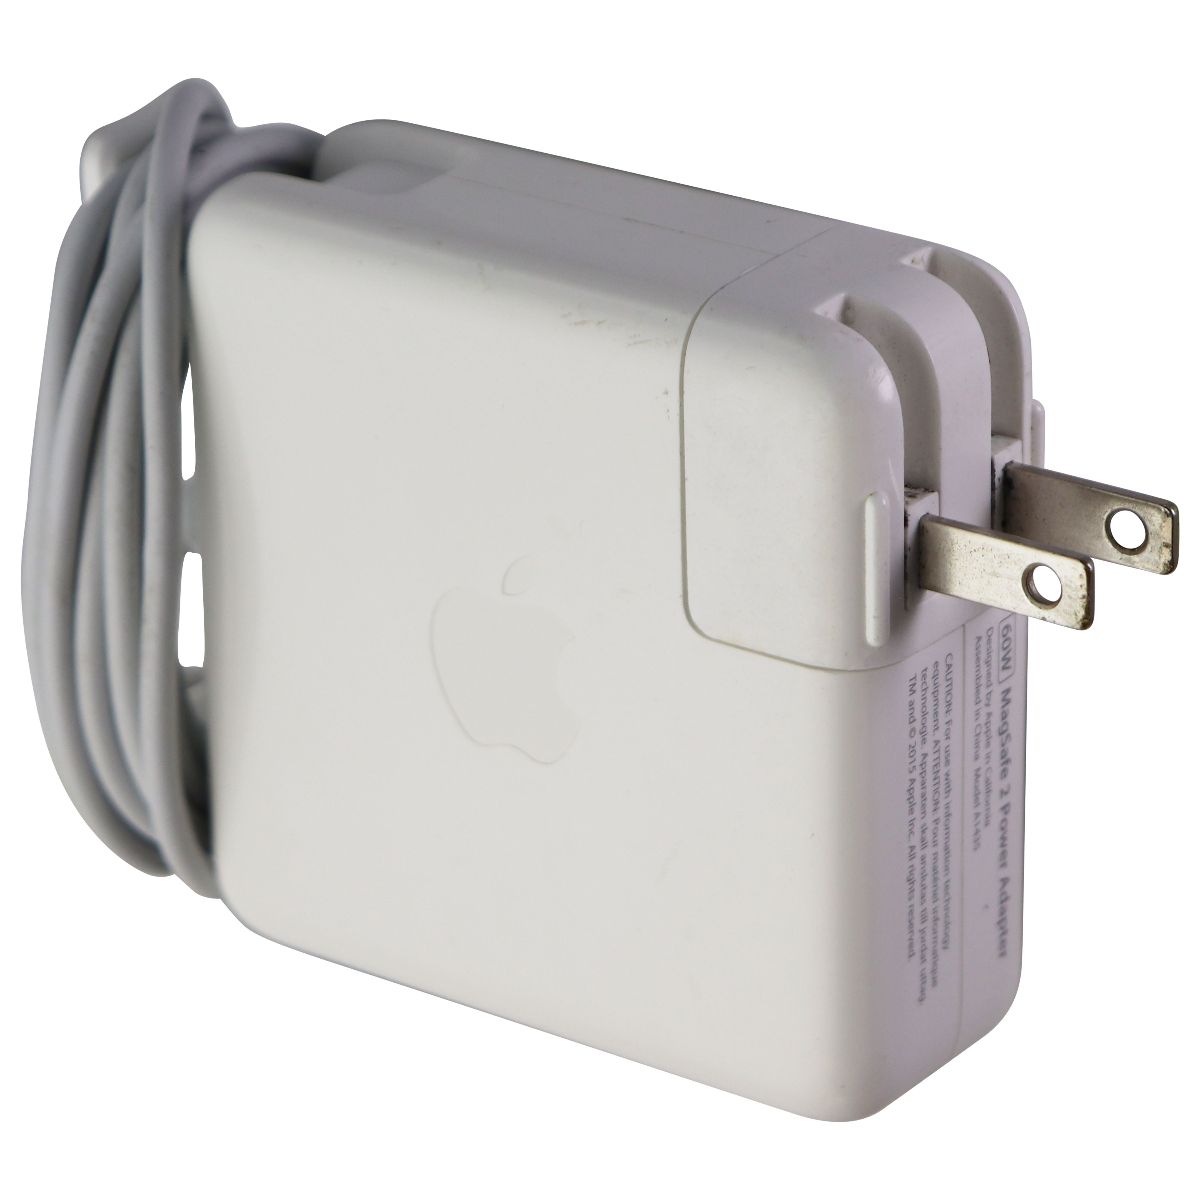 Apple (60-Watt) MagSafe 2 Power Adapter - White (A1435) - Folding Plug Only